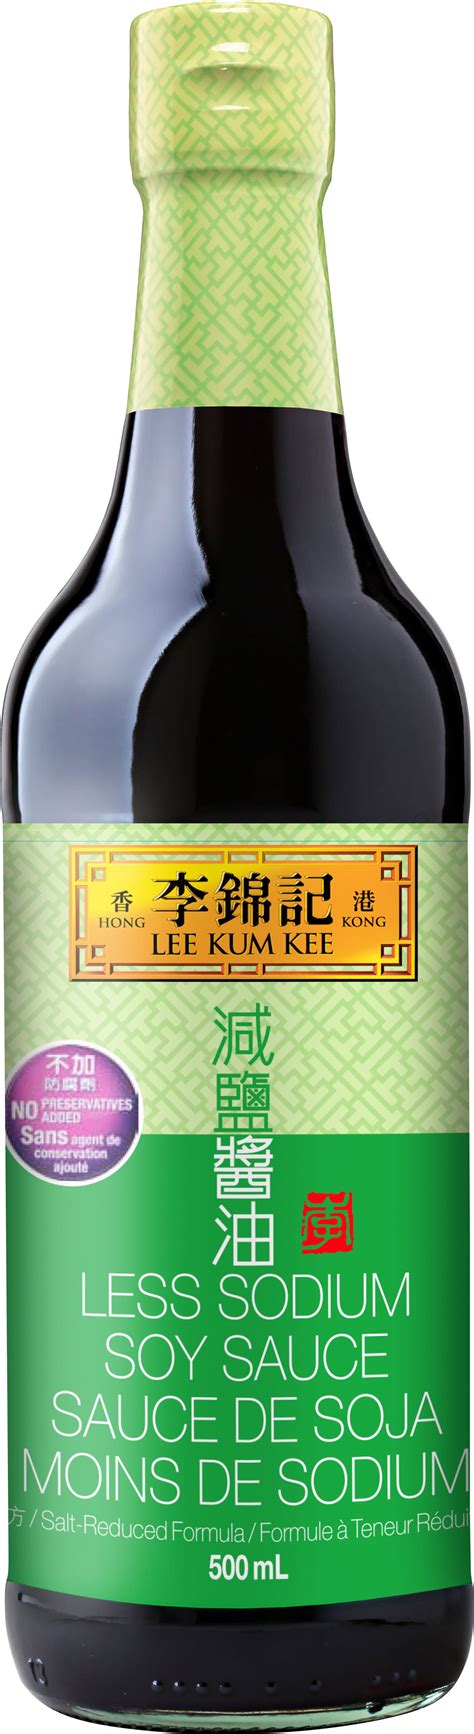 Less Sodium Soy Sauce No Preservatives Added Lee Kum